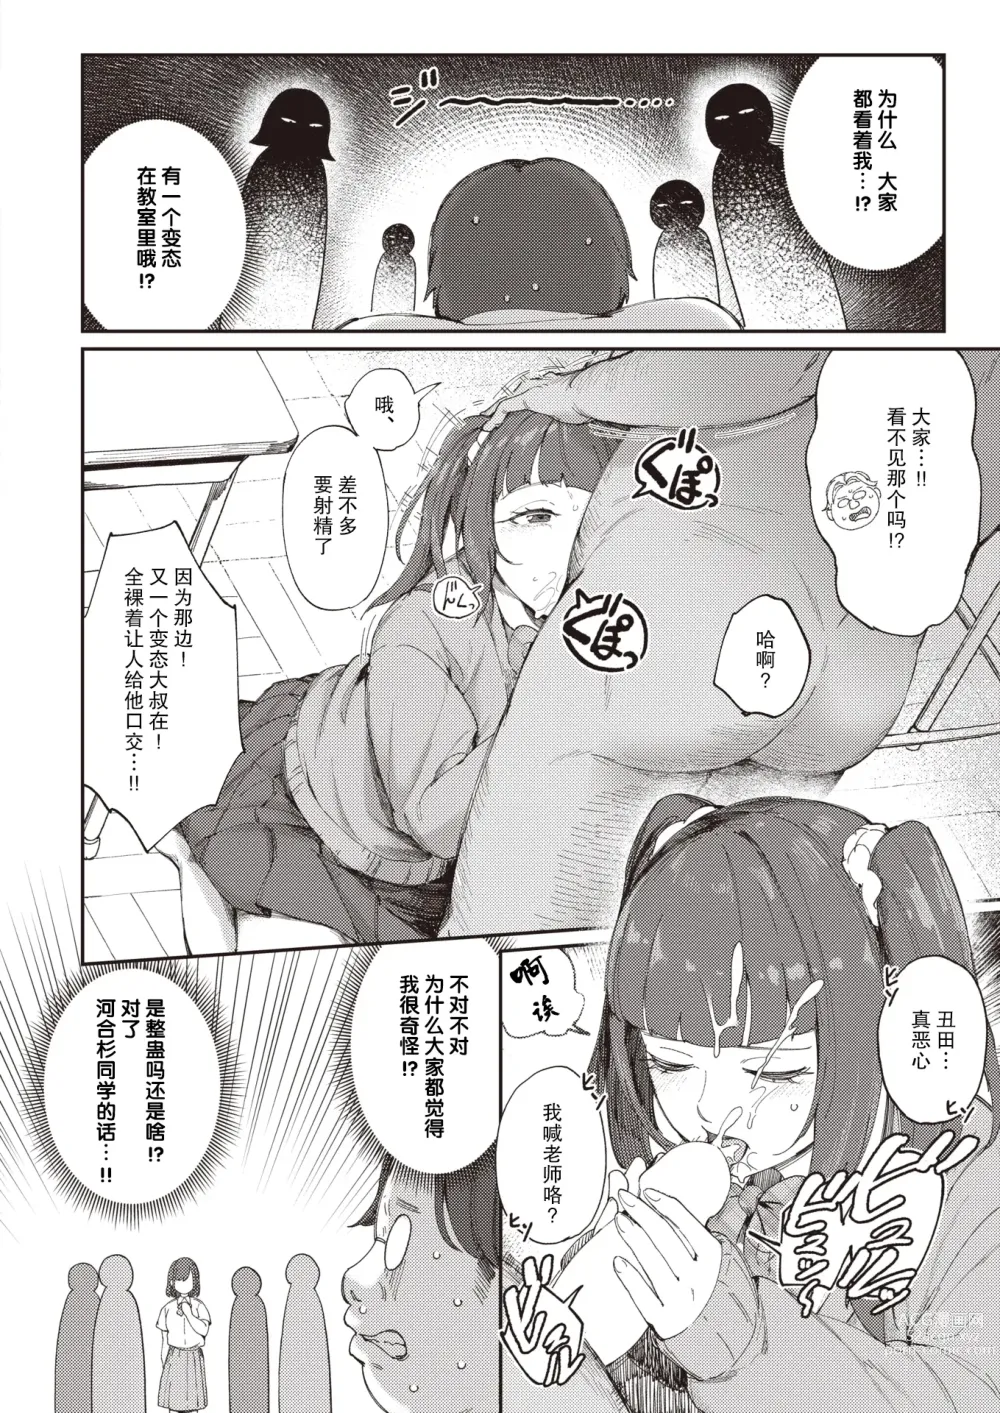 Page 5 of manga ERO ACTION REPLAY!!